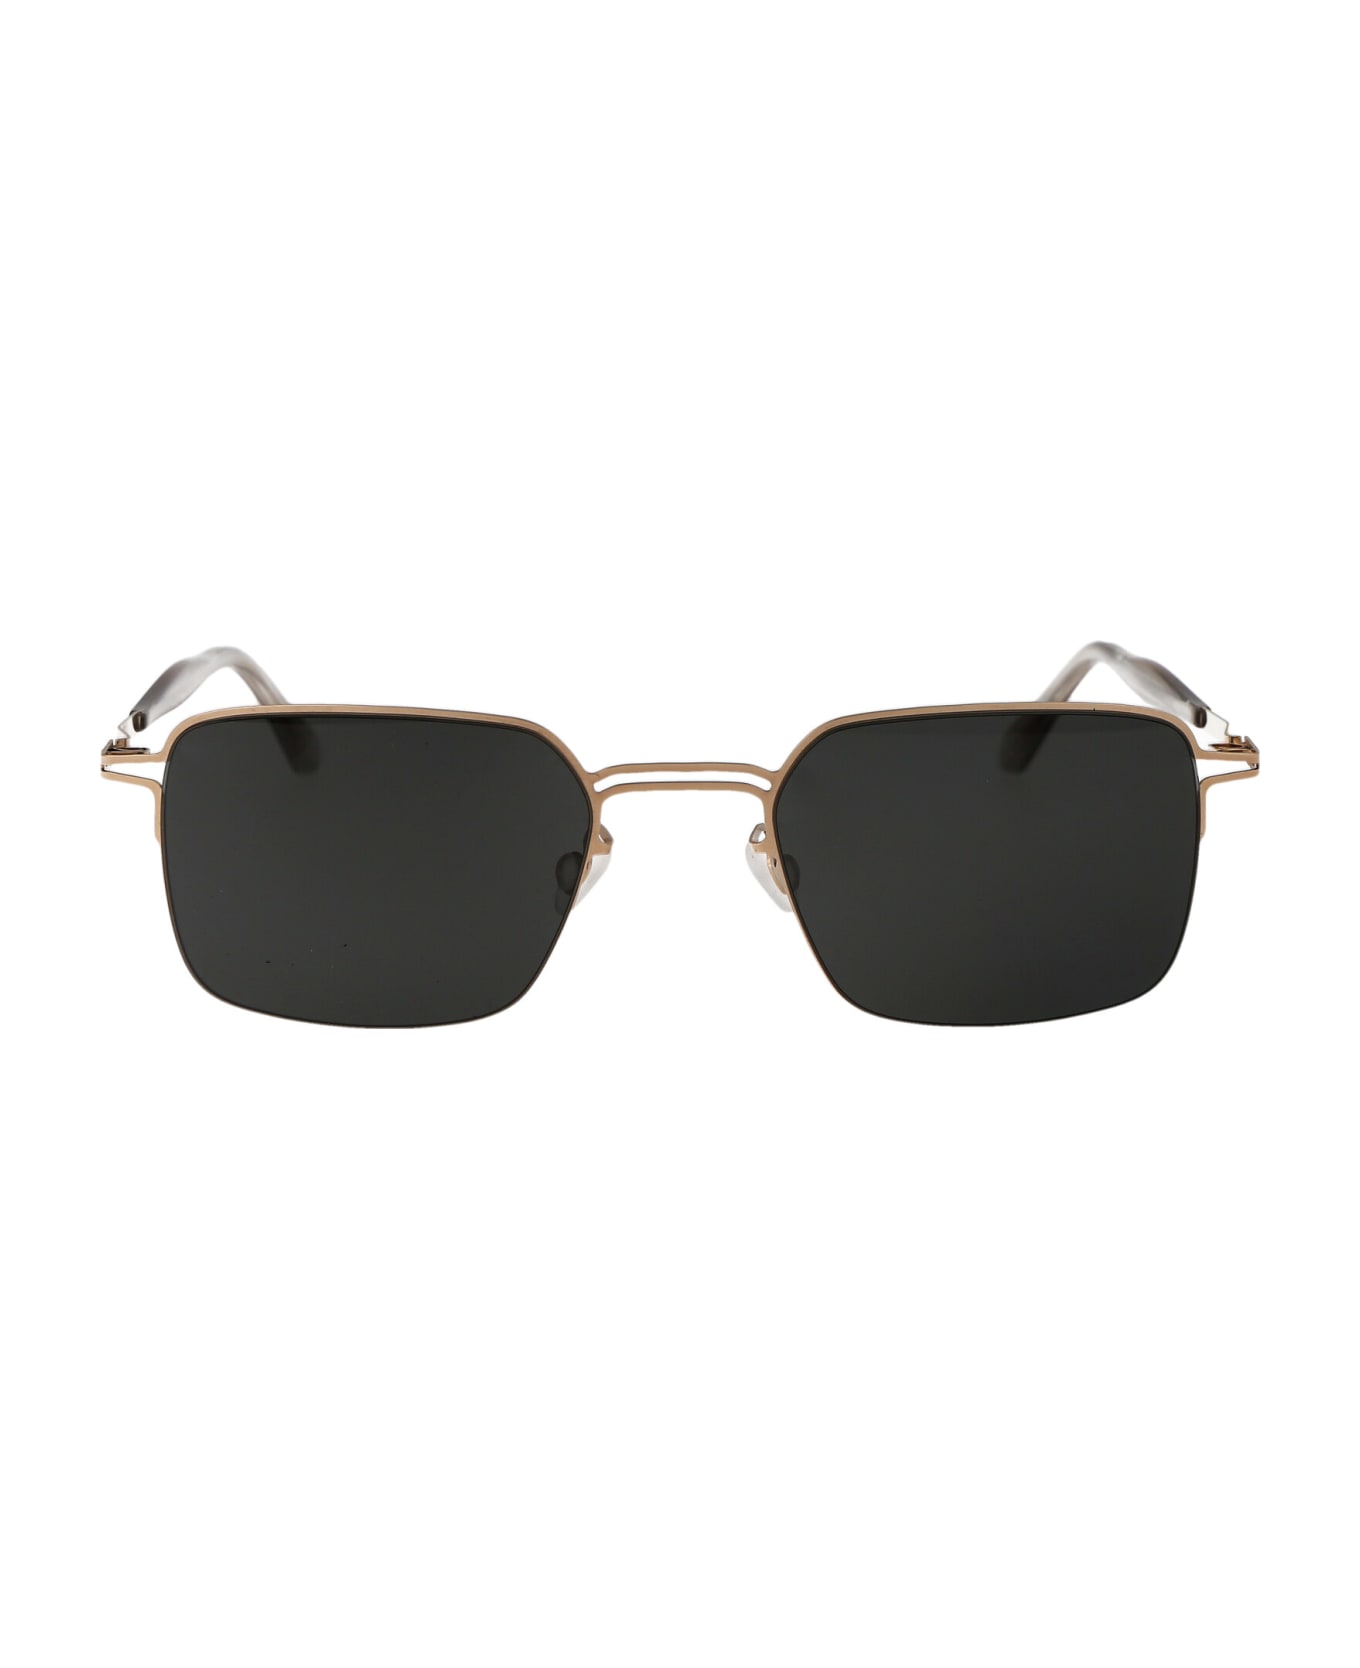 Mykita Alcott Sunglasses - 291 Champagne Gold Dark Grey Solid